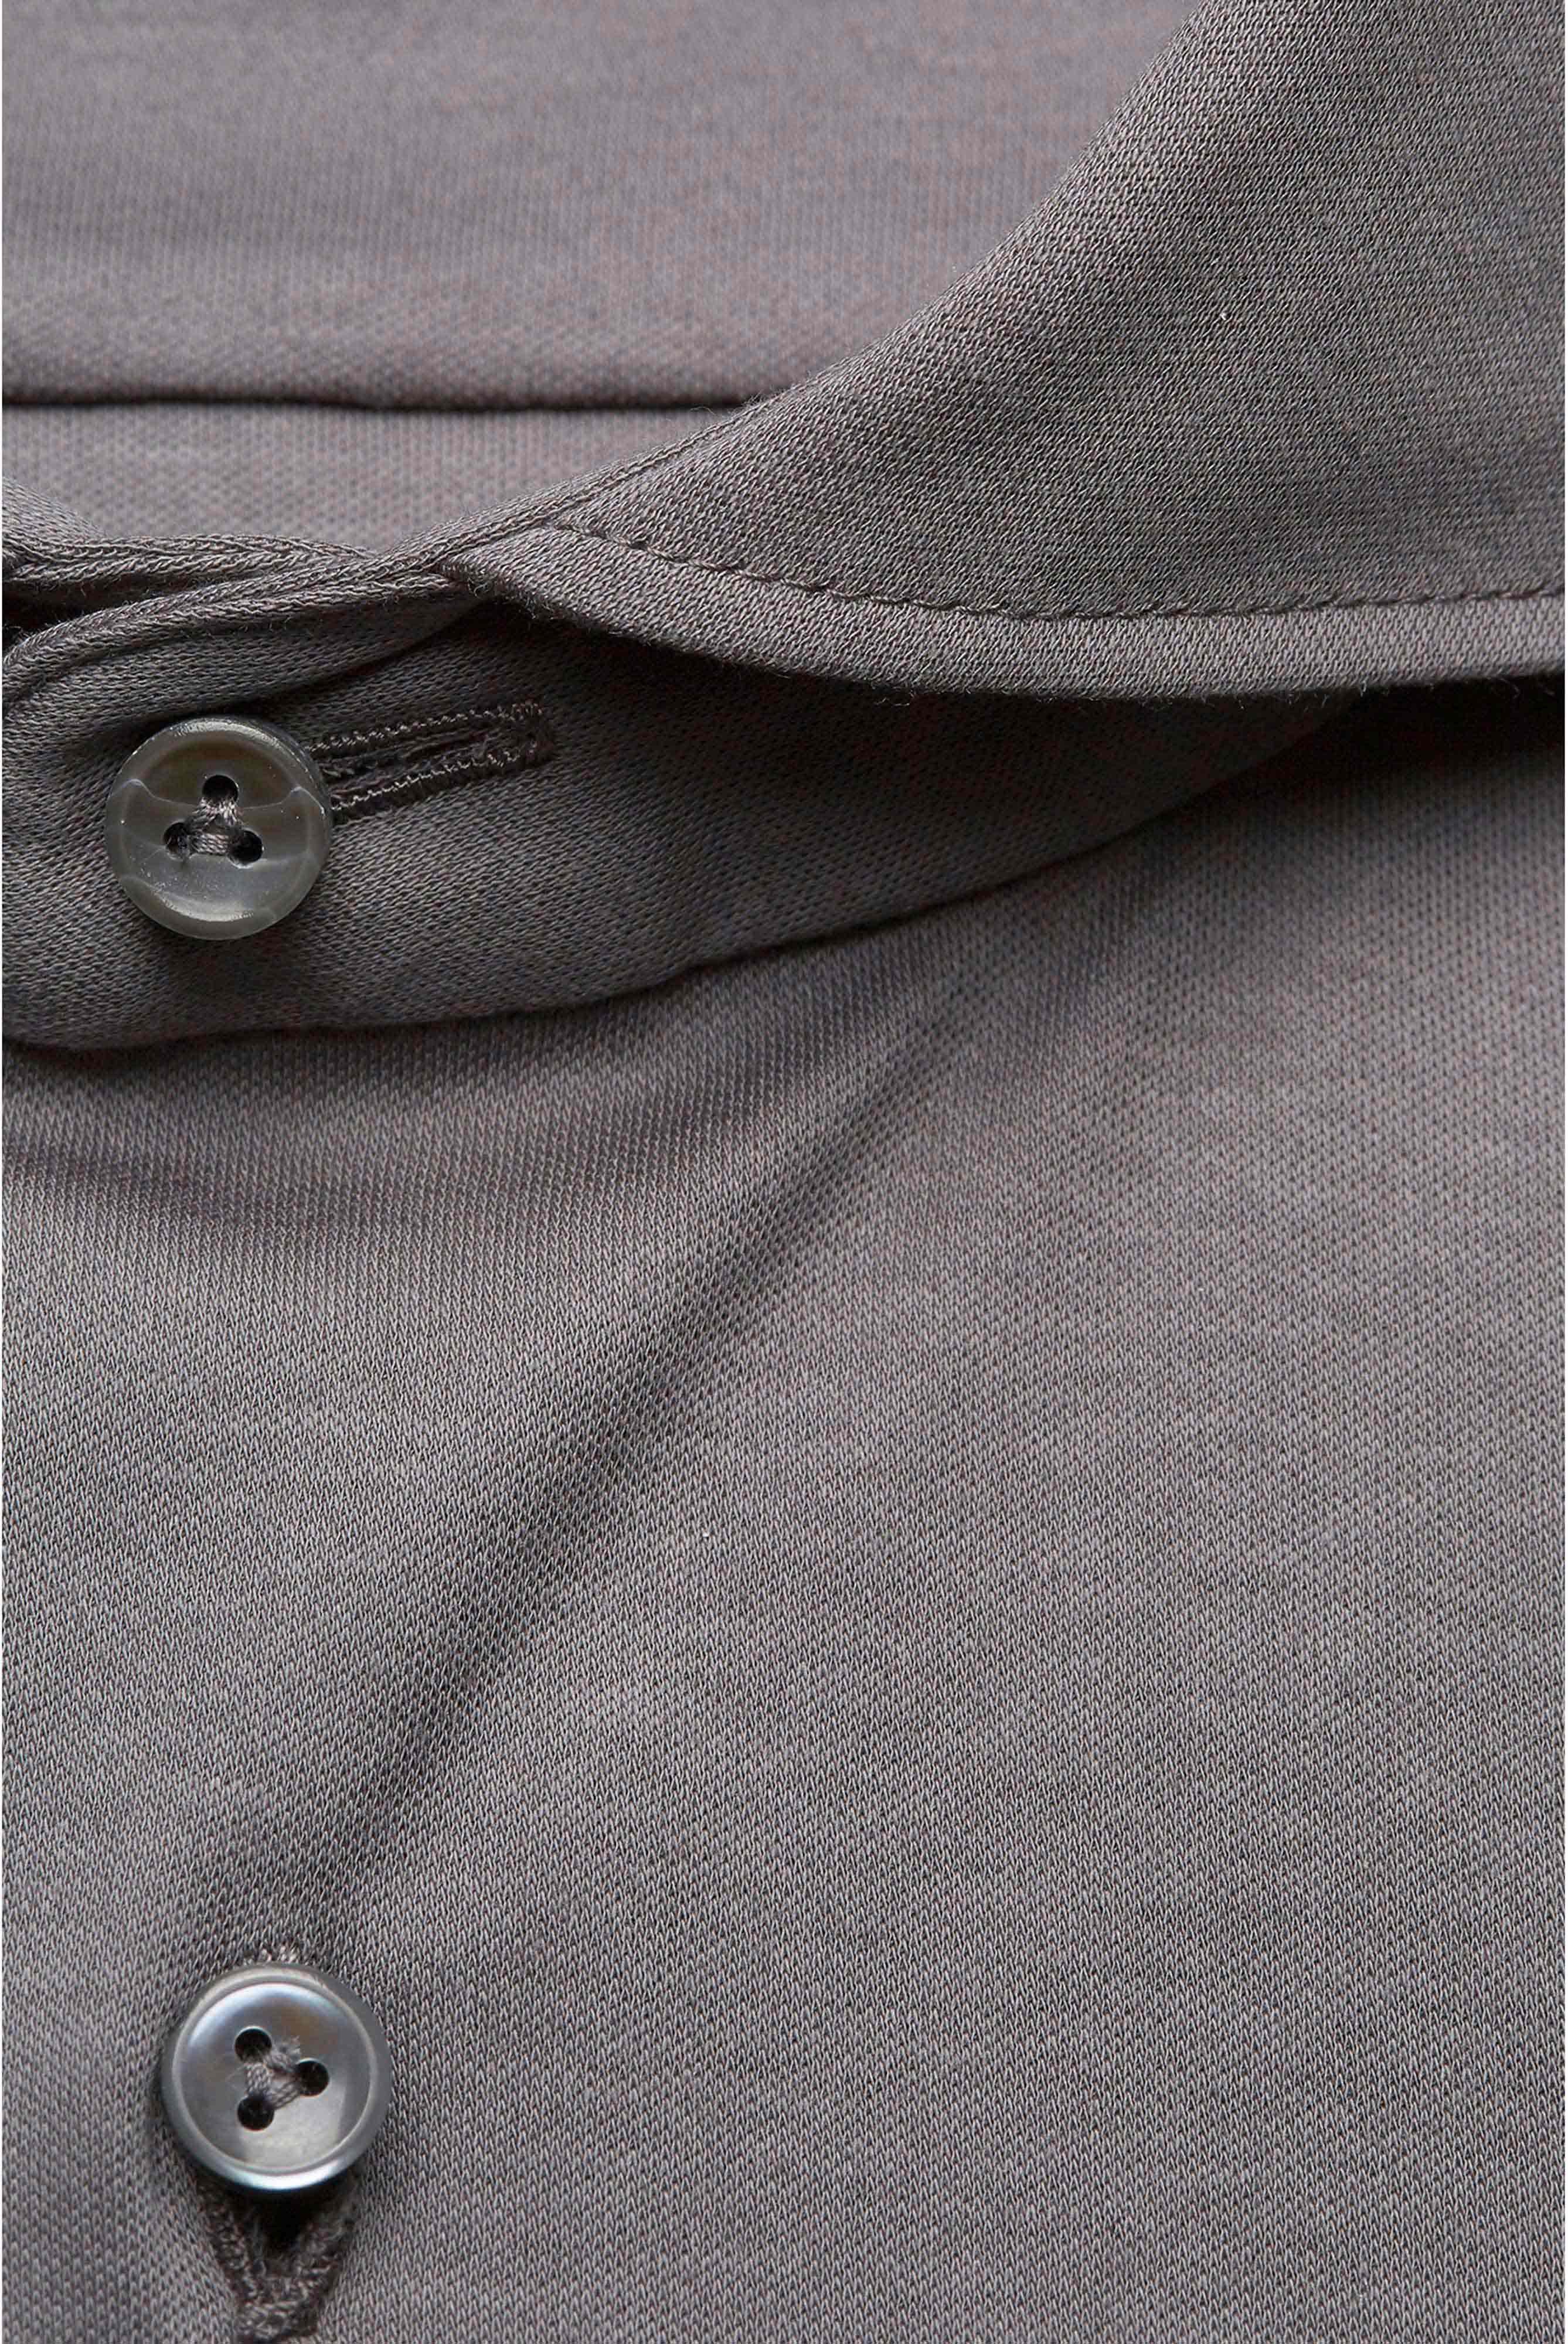 Casual Hemden+Jersey Hemd aus Schweizer Baumwolle Tailor Fit+20.1683.UC.180031.070.XL